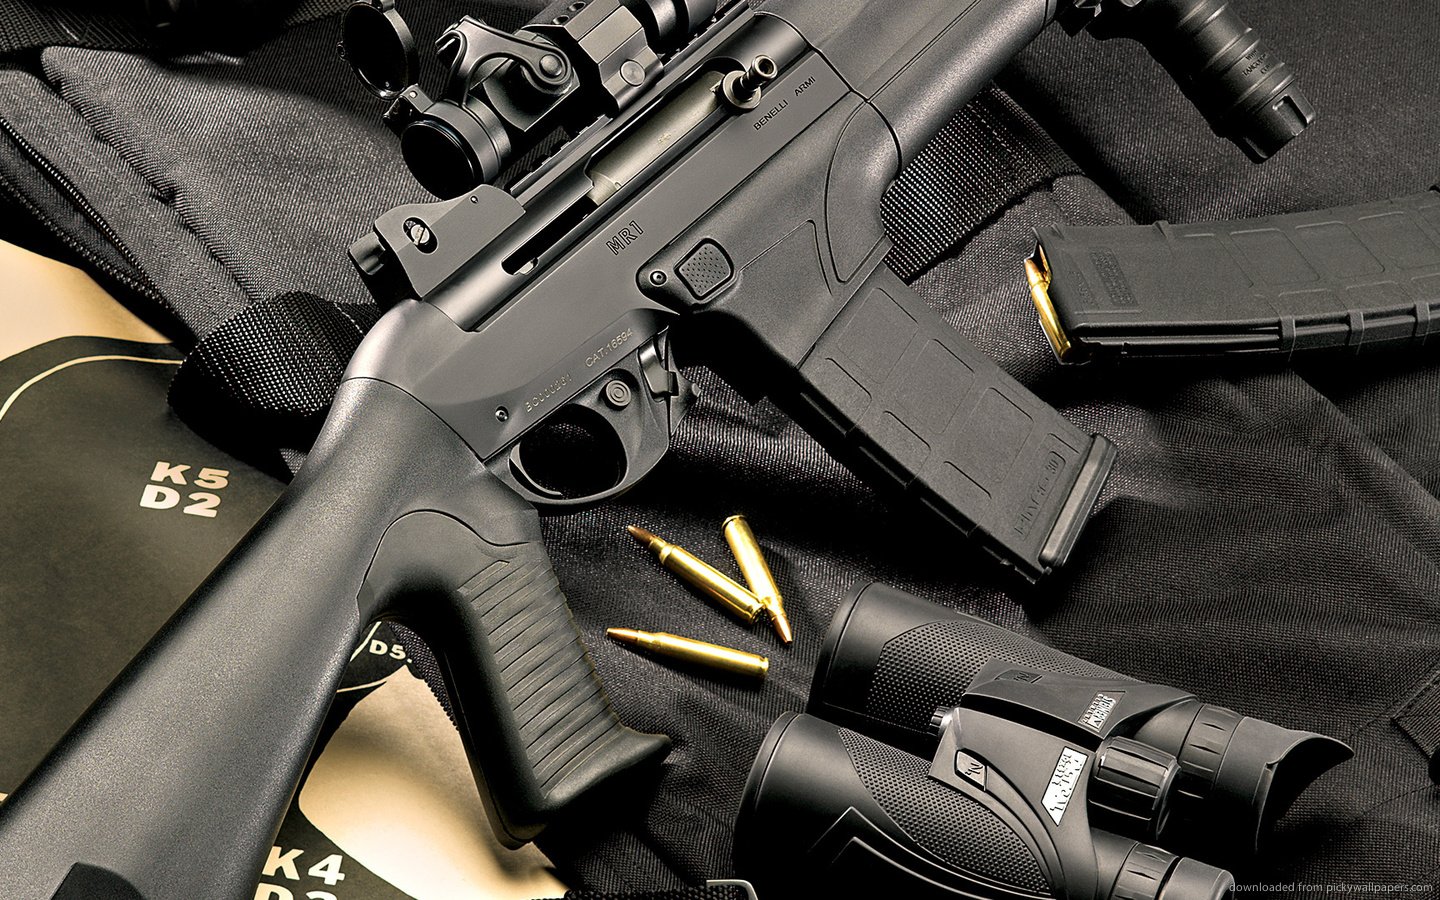 Download 1440x900 Colt M4 Rifle Shells And Binoculars Wallpaper